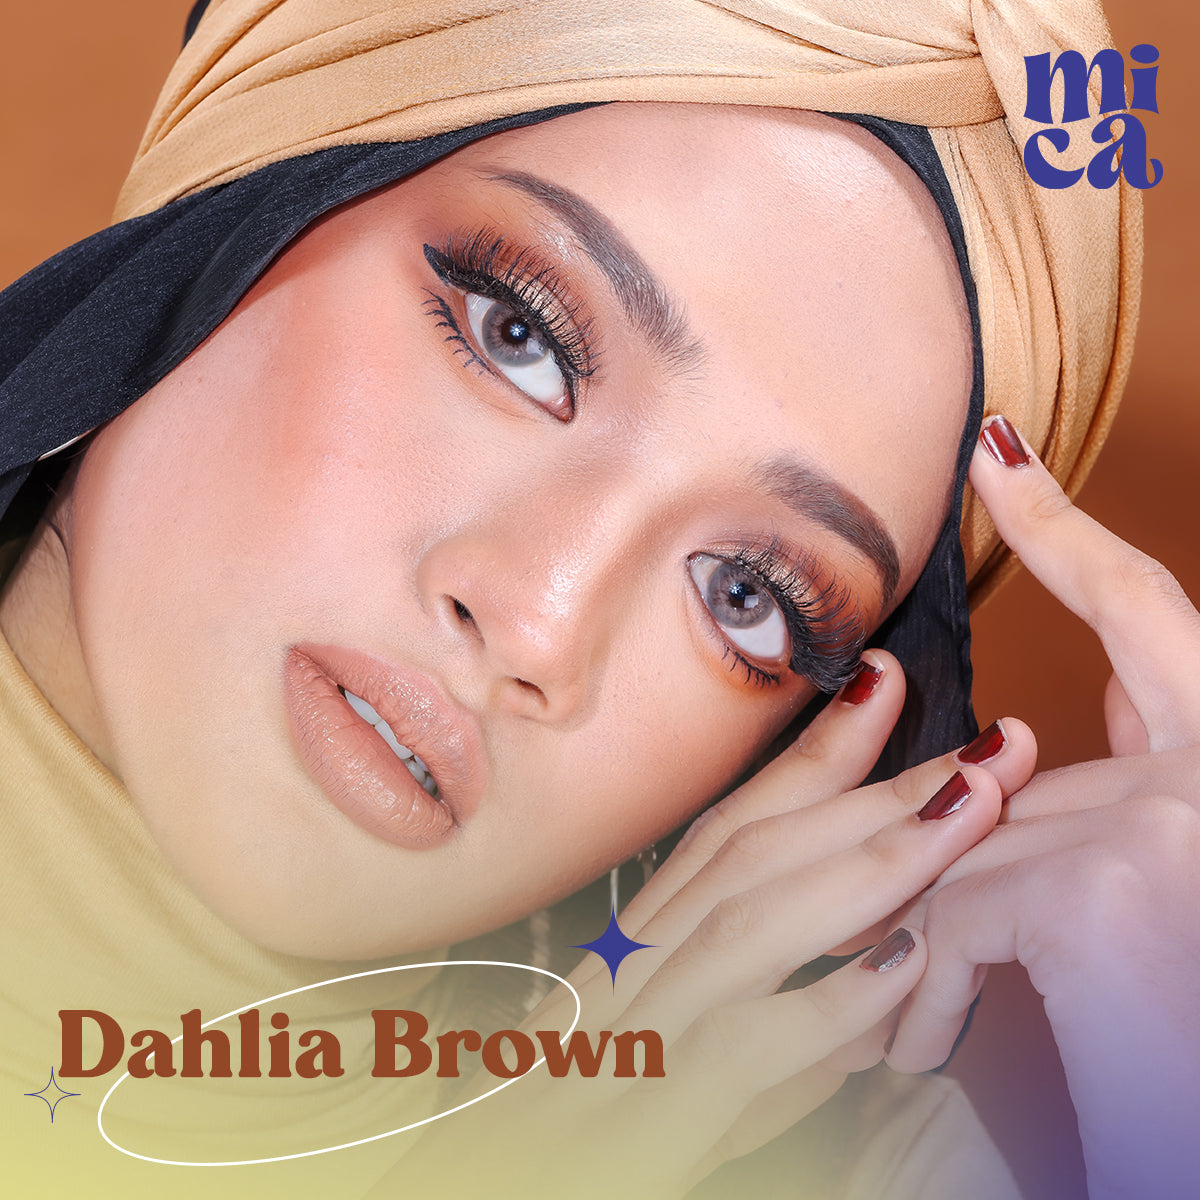 Dahlia Brown 0-800